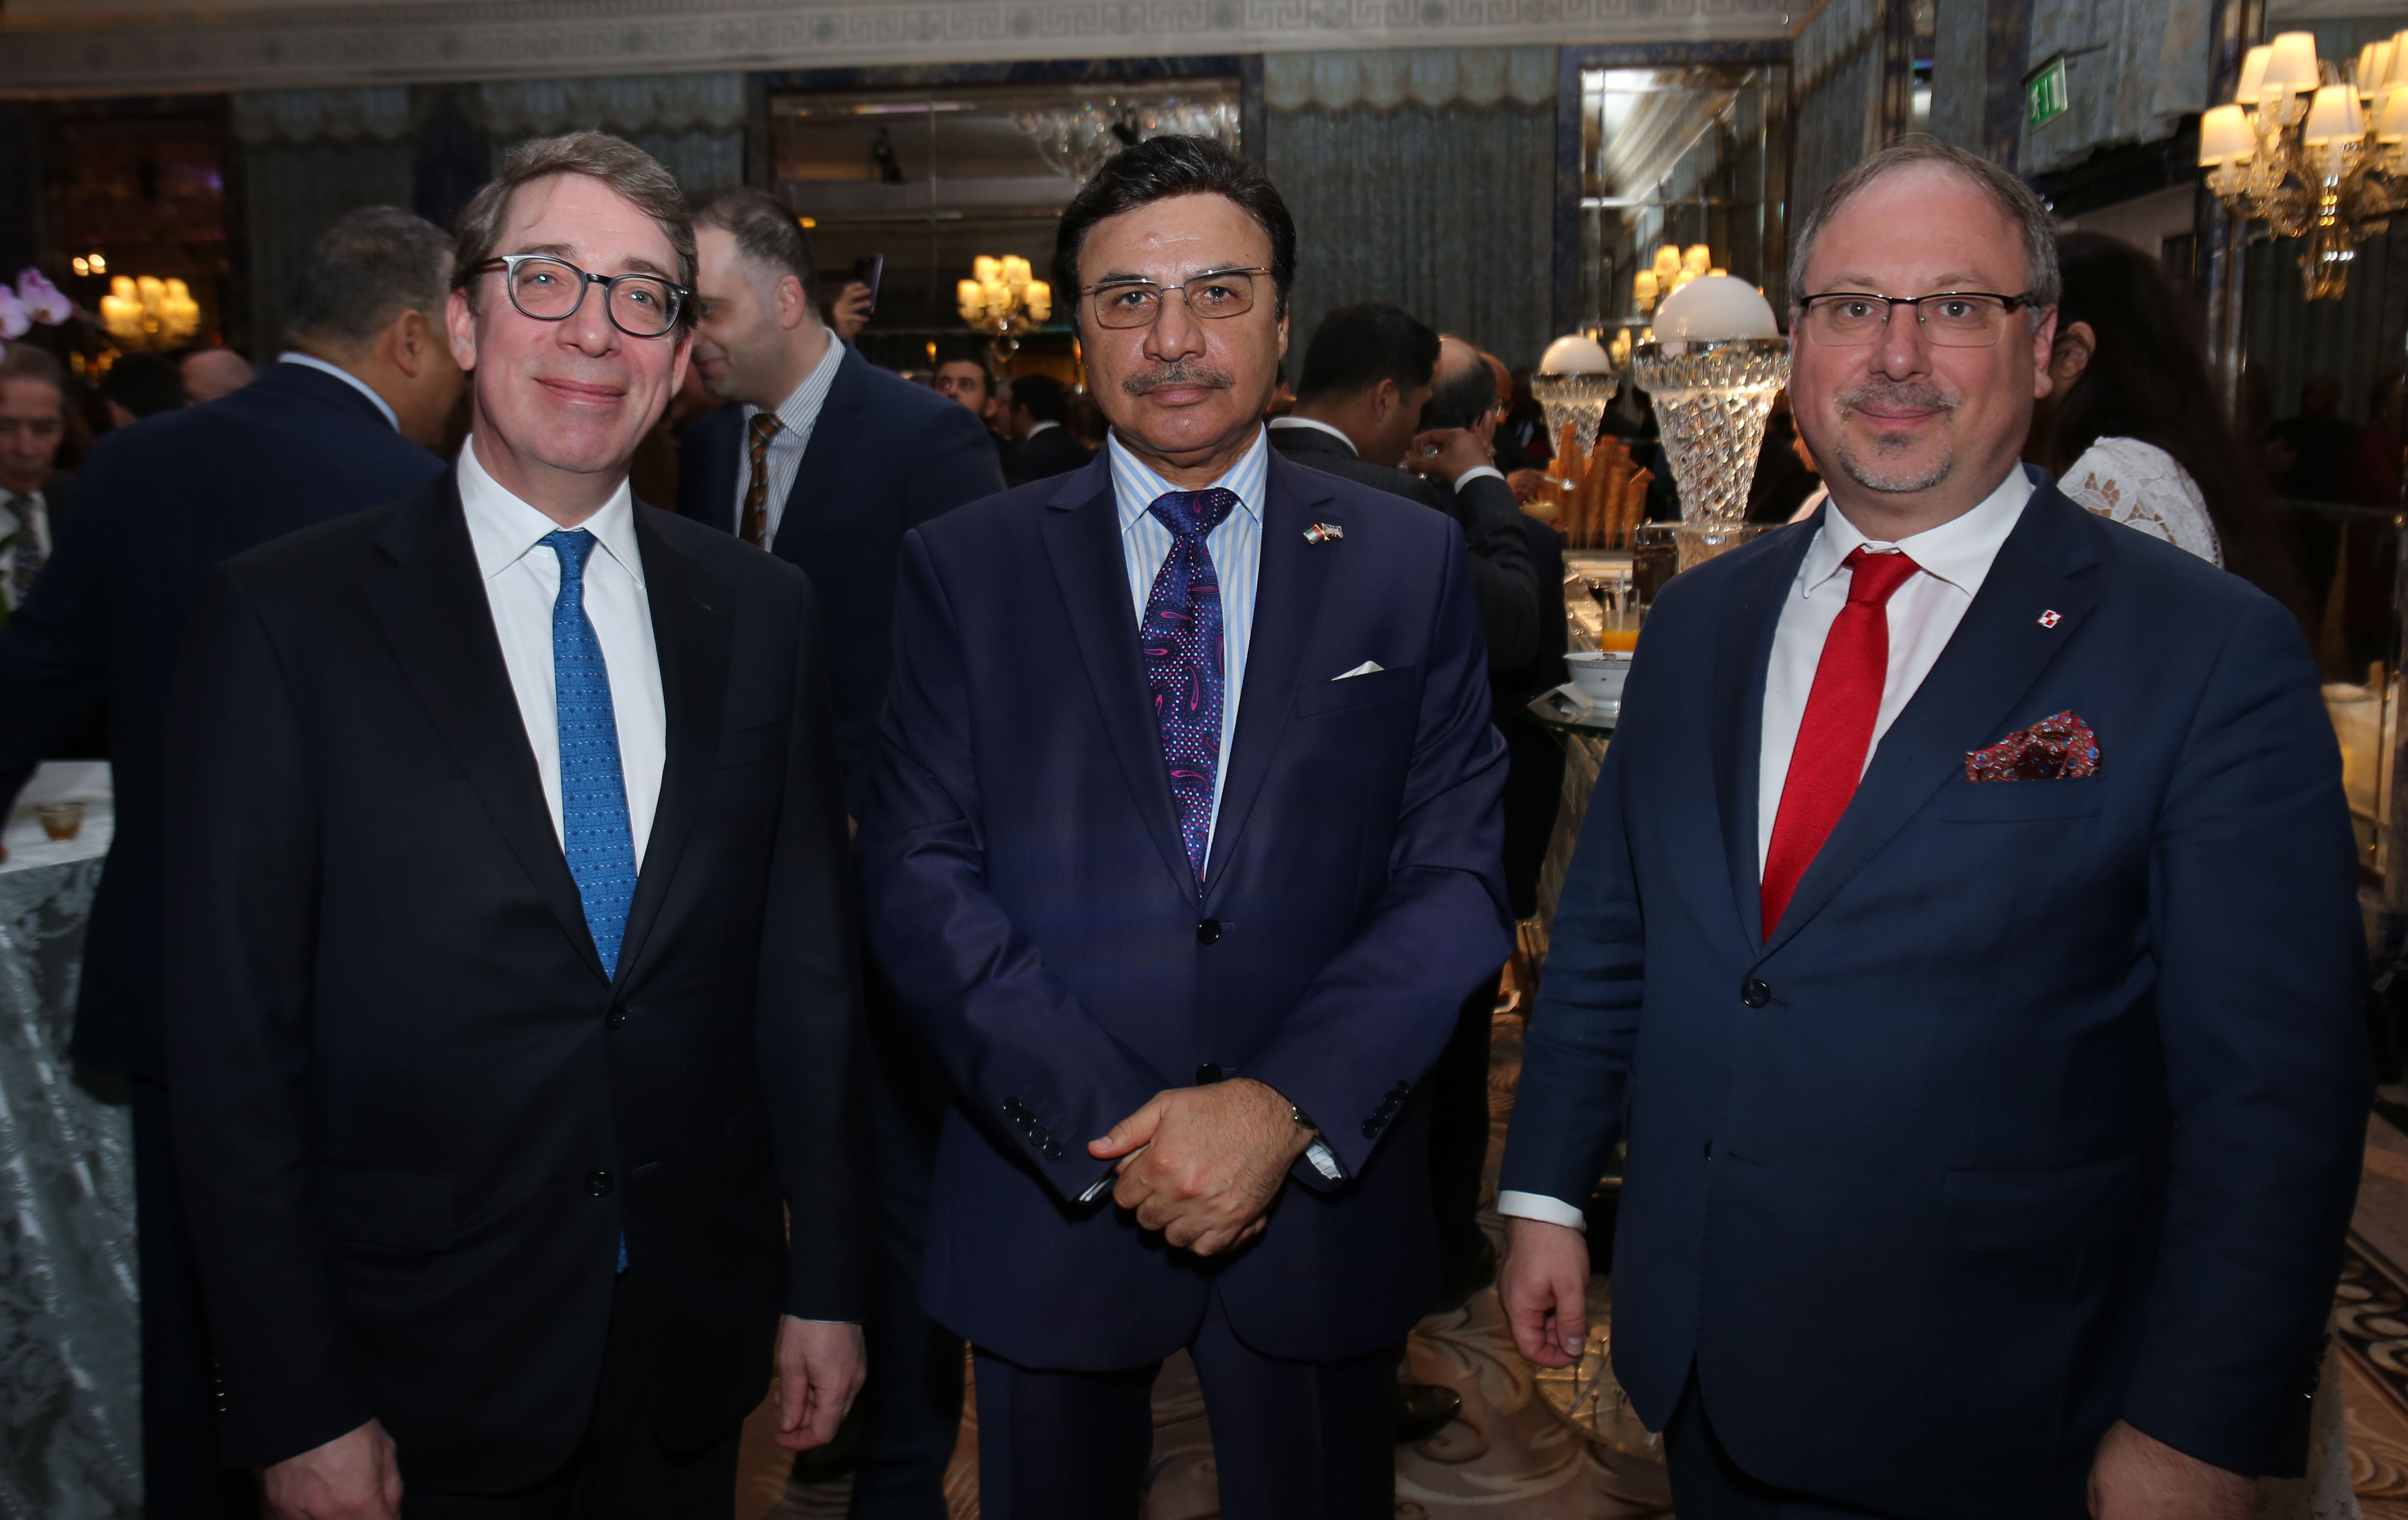 The Ambassadors of Luxembourg Jean Olinger, UAE Ambassador Sulaiman Hamid Salem Almazroui and the Ambassador of Poland, Arkady Rzegocki catch up at the reception